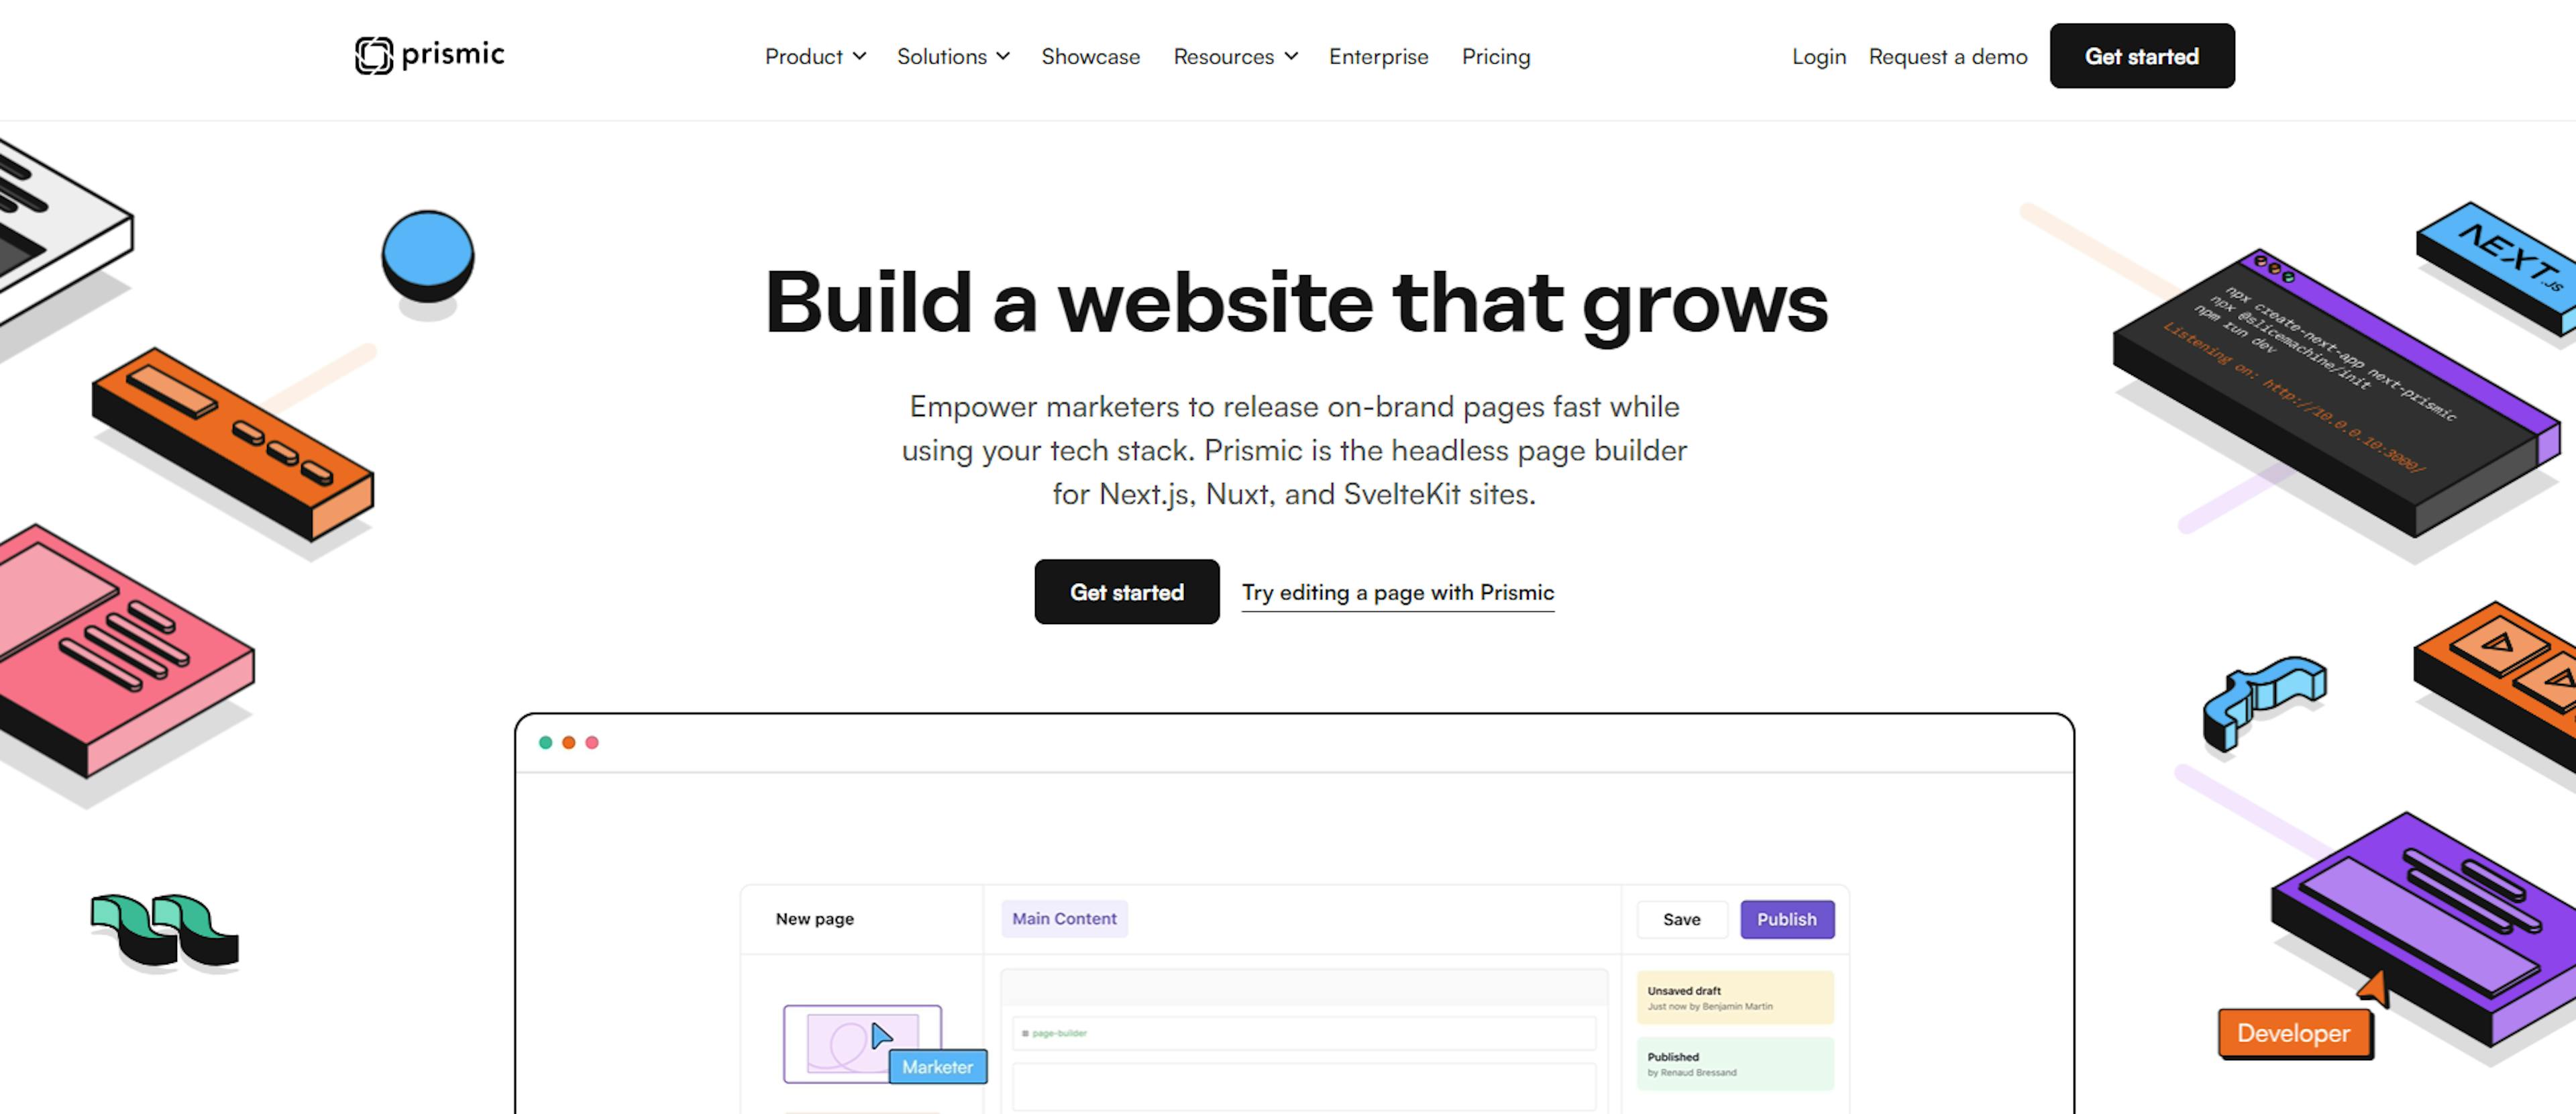 An image of Prismic website after redesign.